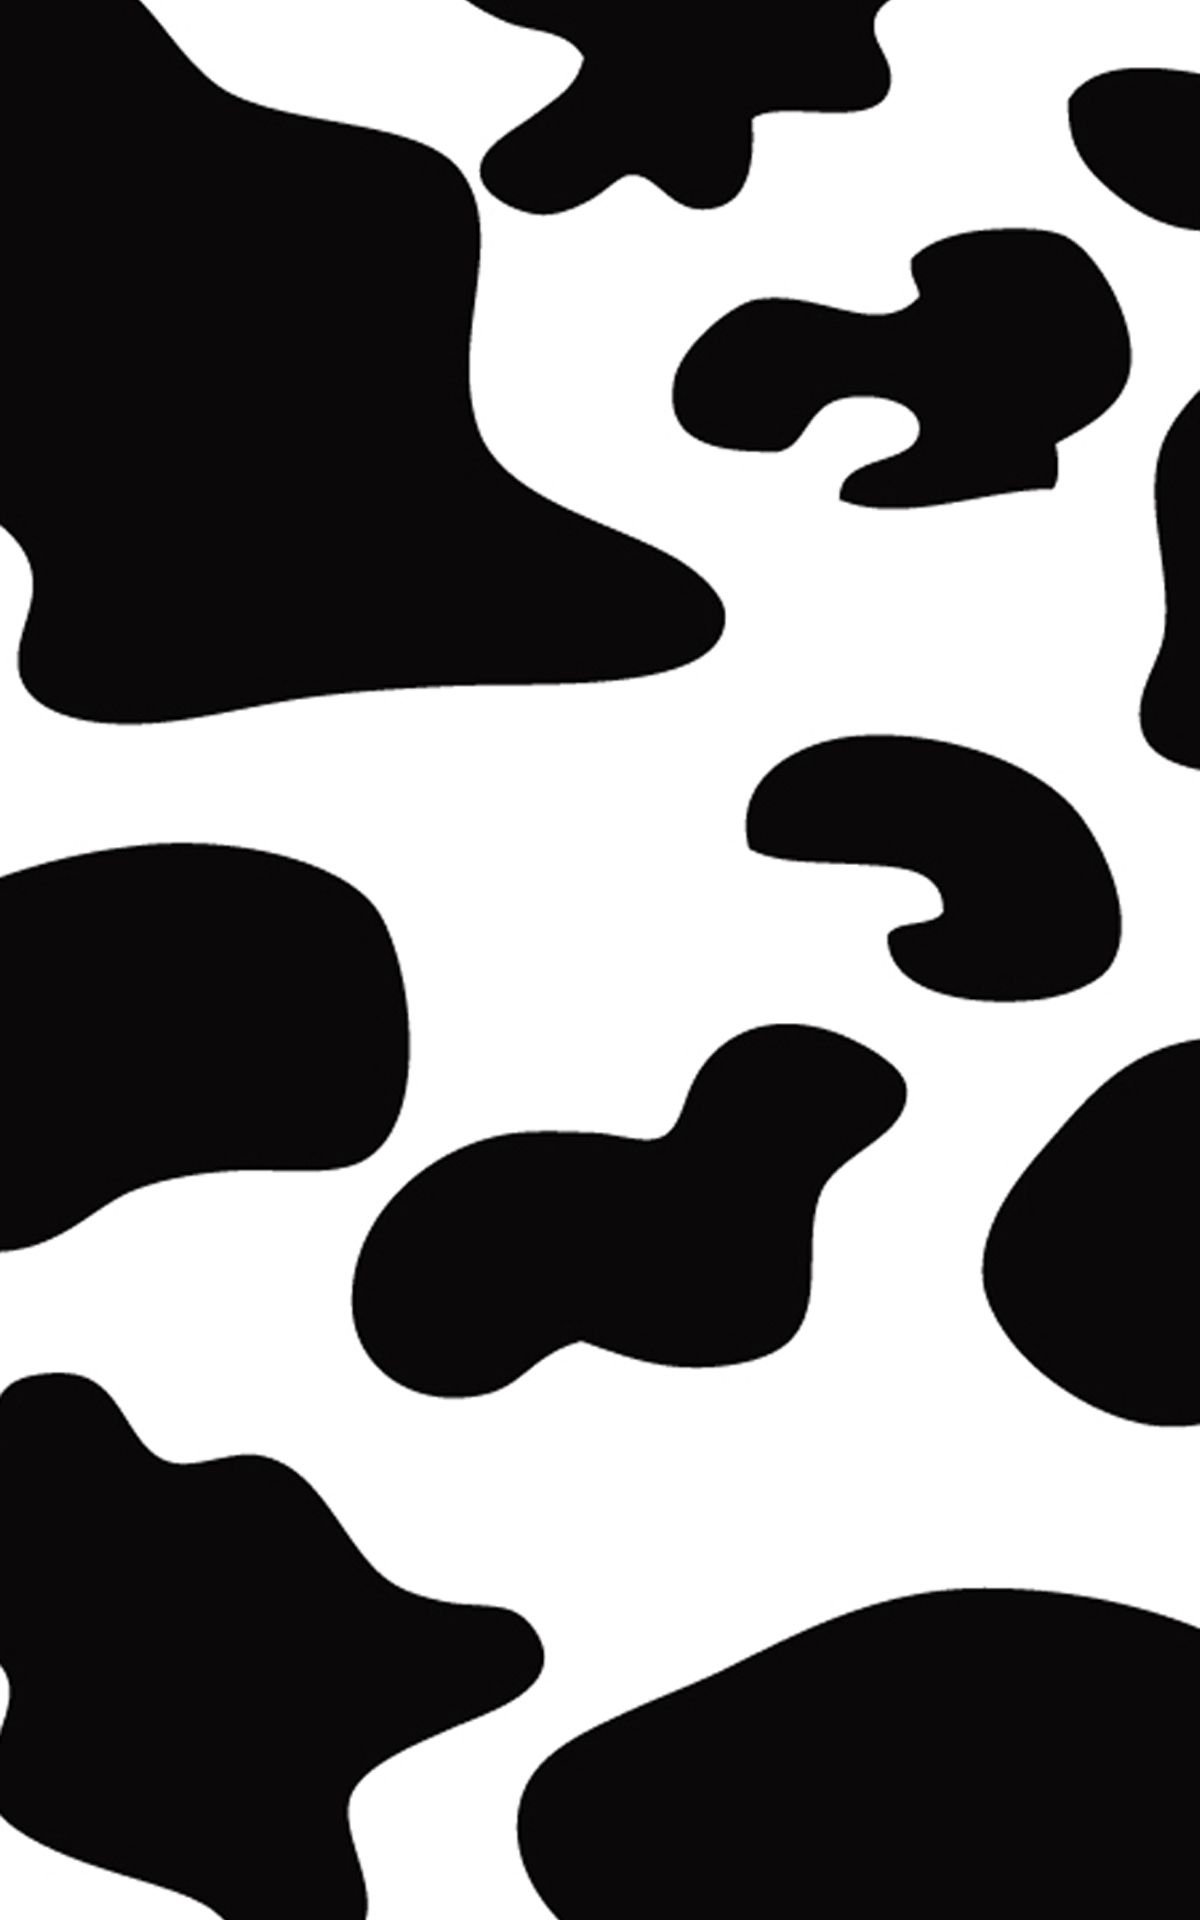 Best Cow iPhone HD Wallpapers  iLikeWallpaper